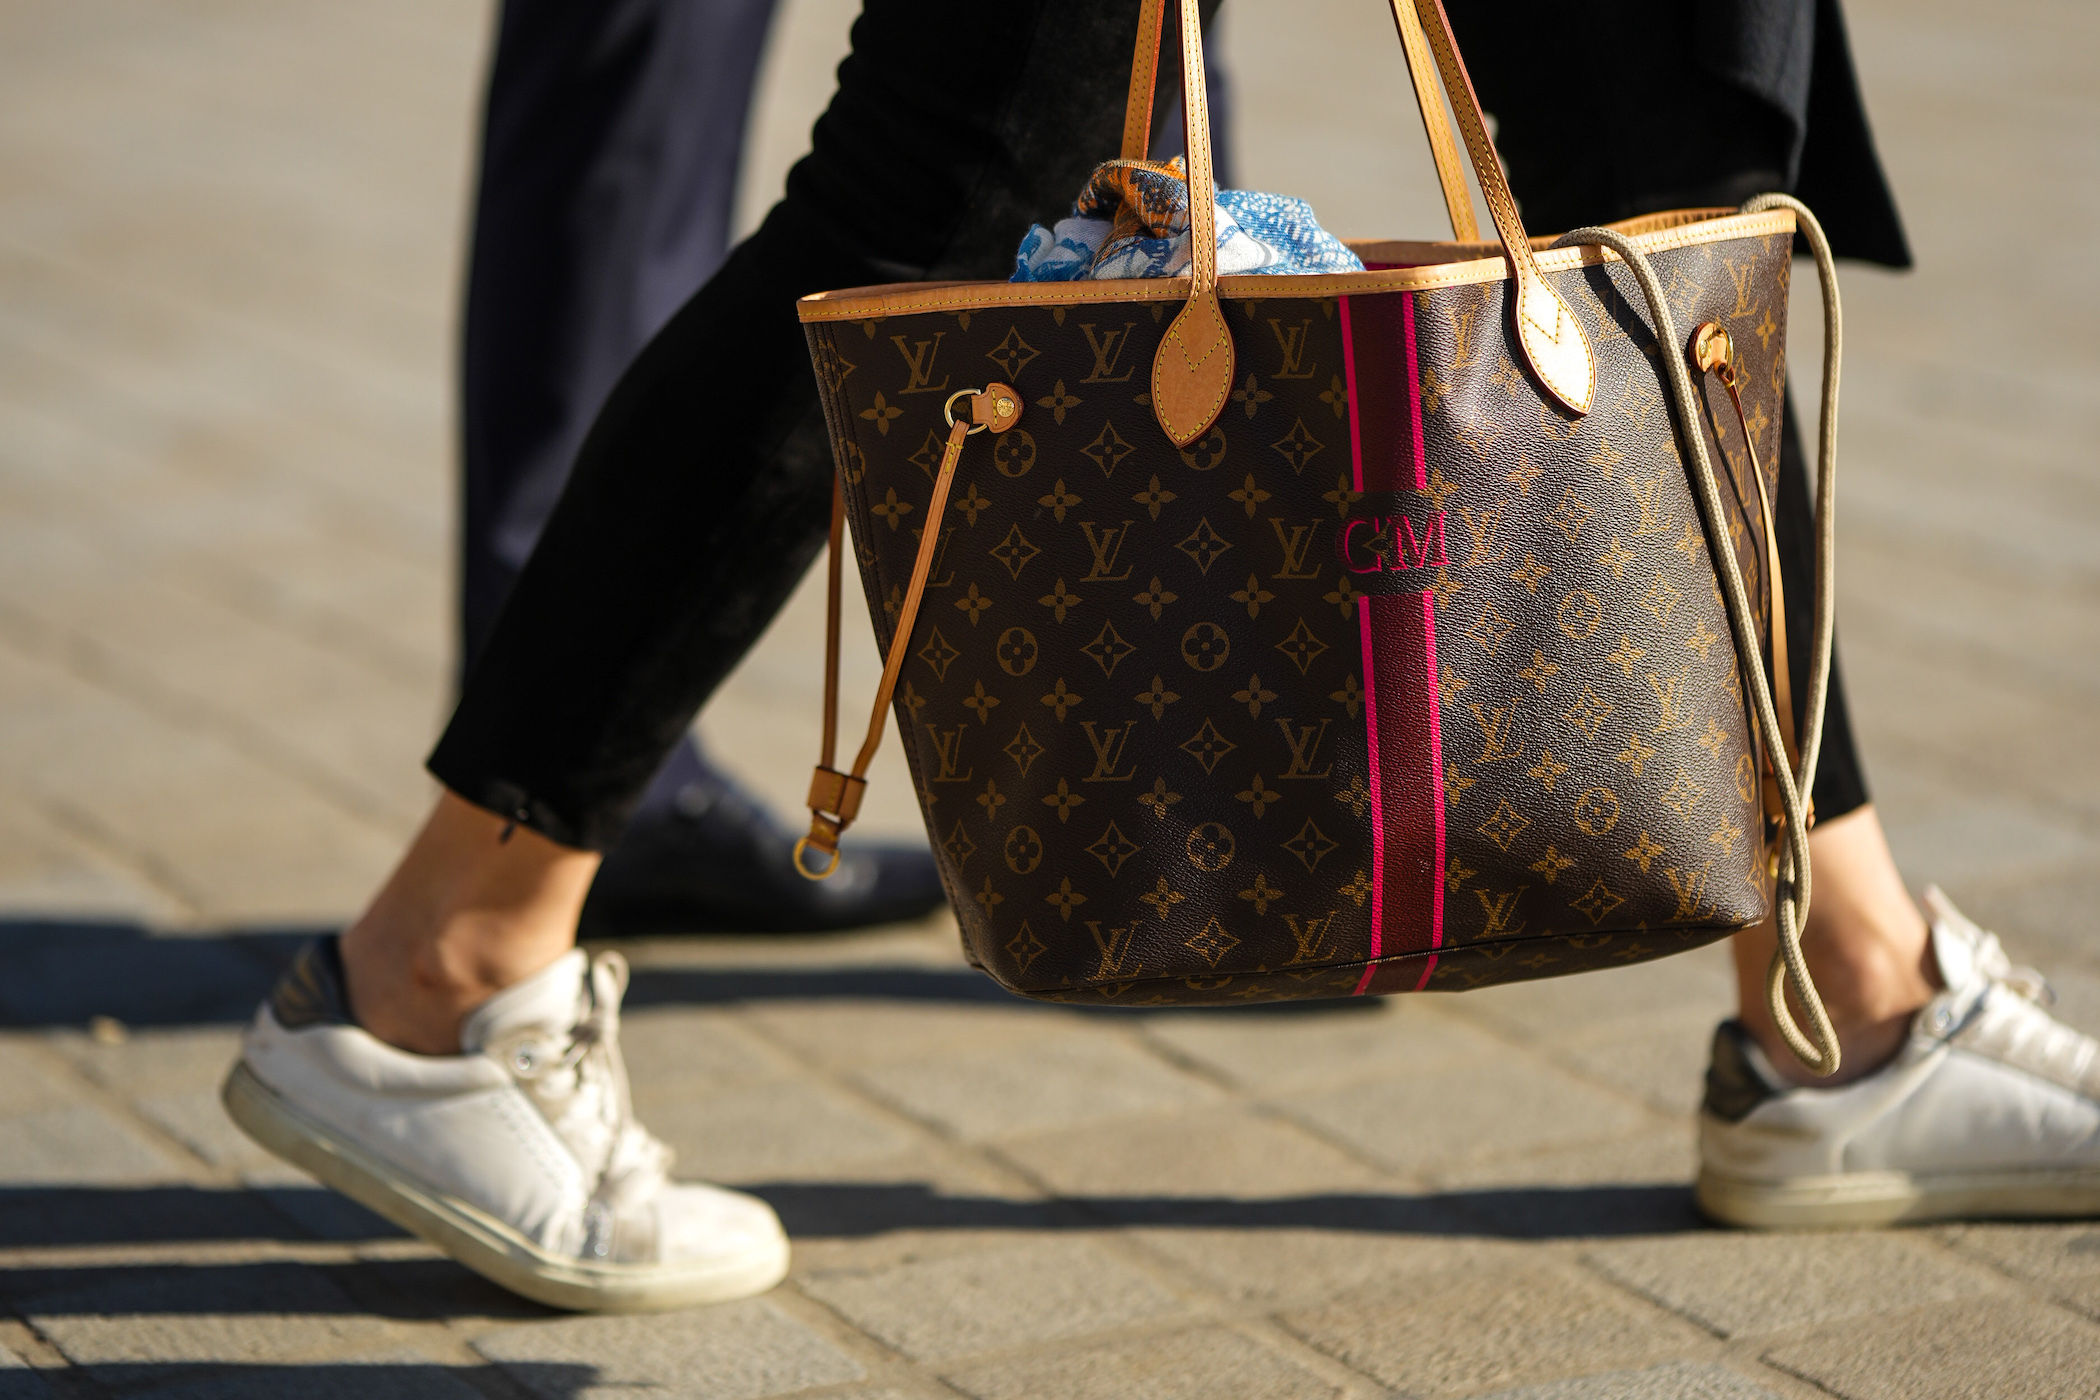 Dubai Fashionista  Louis vuitton handbags outlet, Lv handbags, Fashion bags